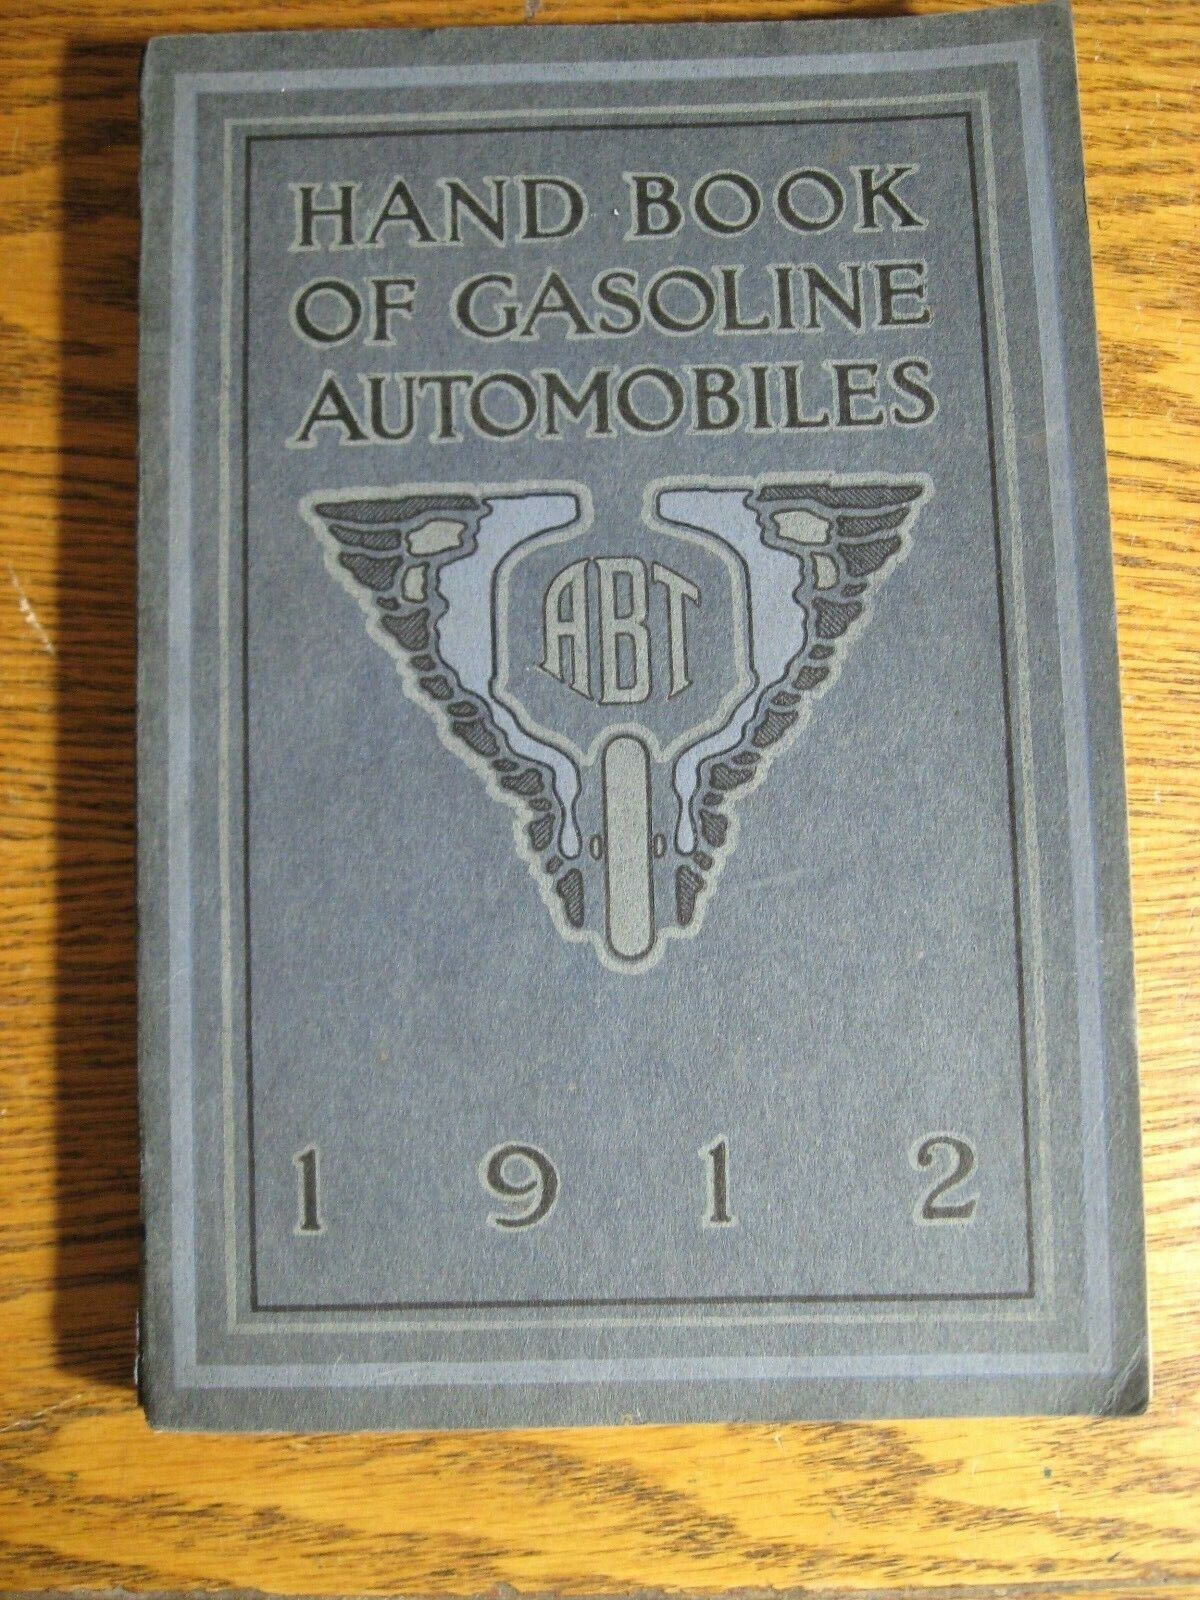 1912 Hand Book of Gasoline Automobiles HandBook, Cadillac Packard Reo Buick